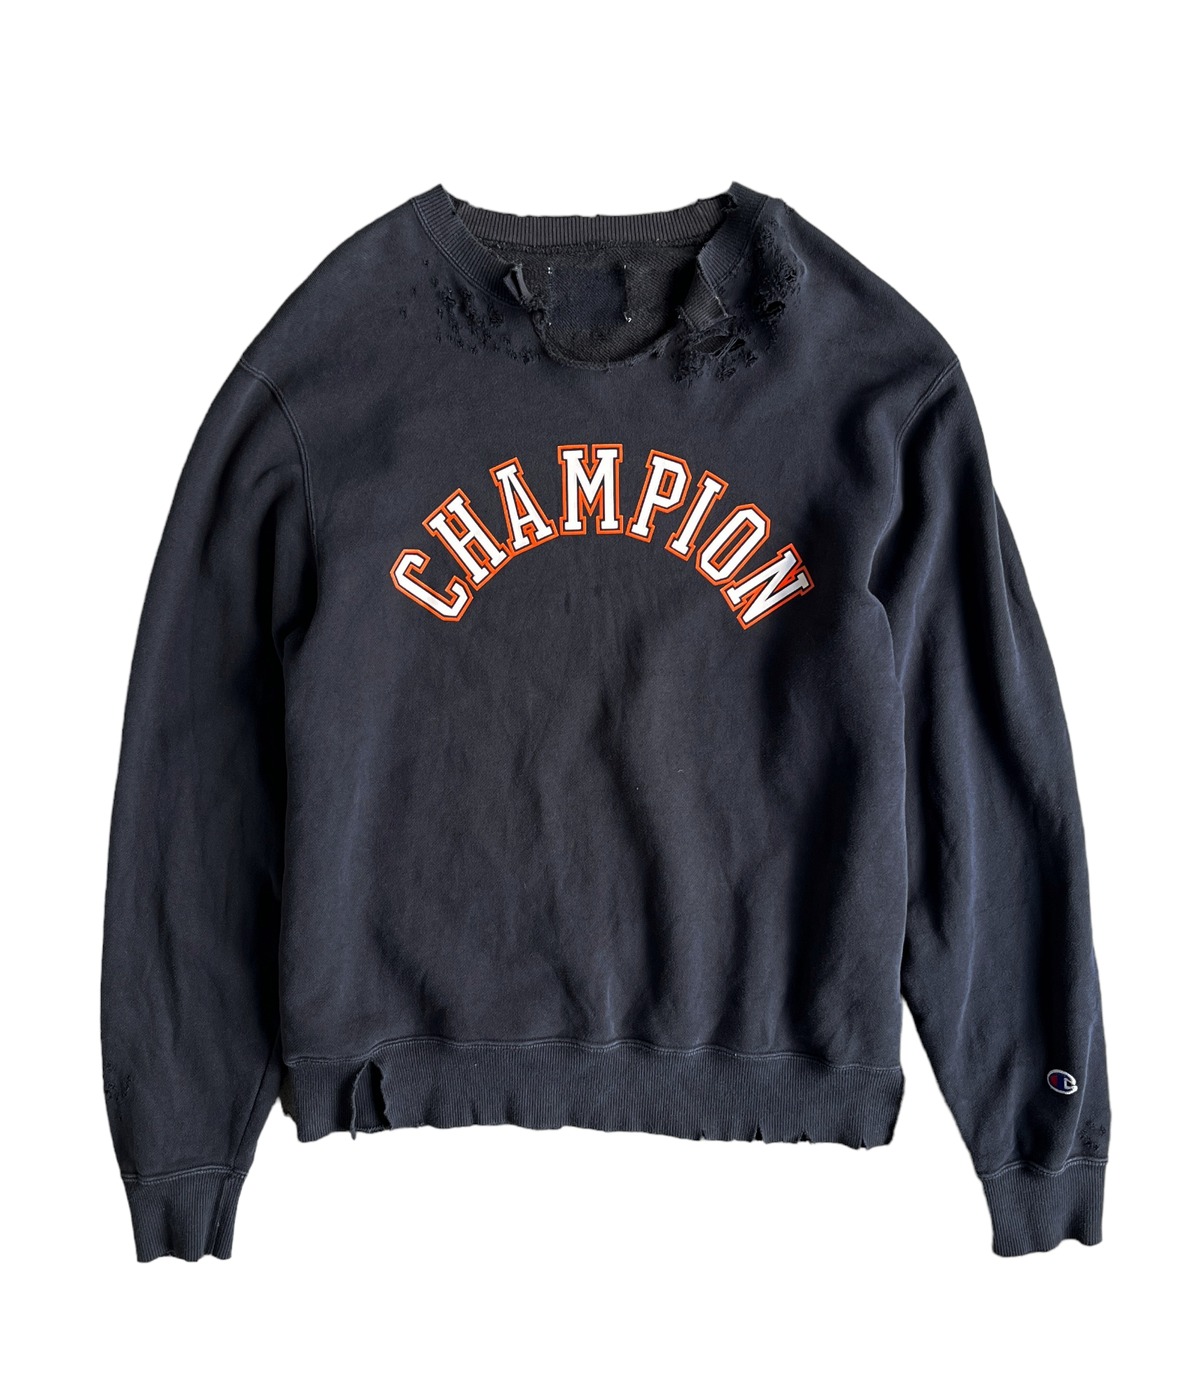 00s Champion vintage sweat shirt リバース